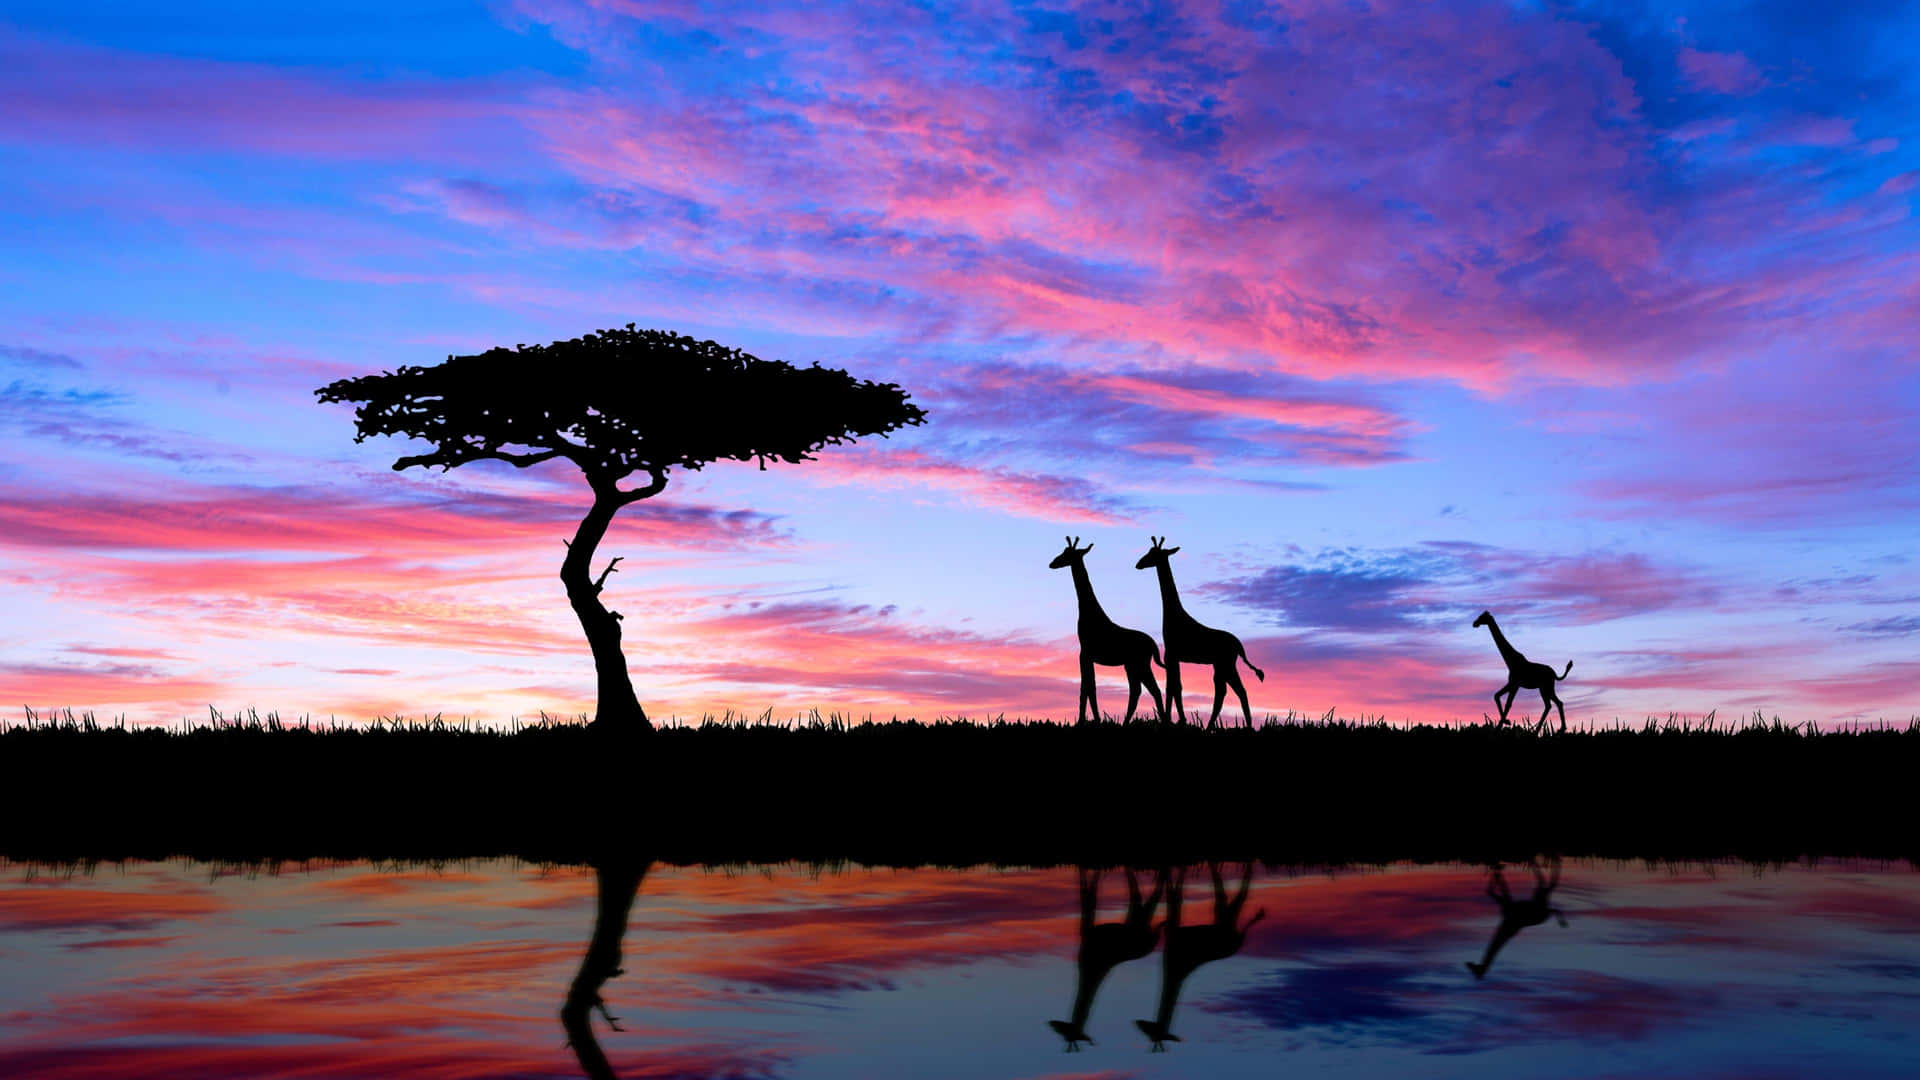 Explore the wonders of Africa